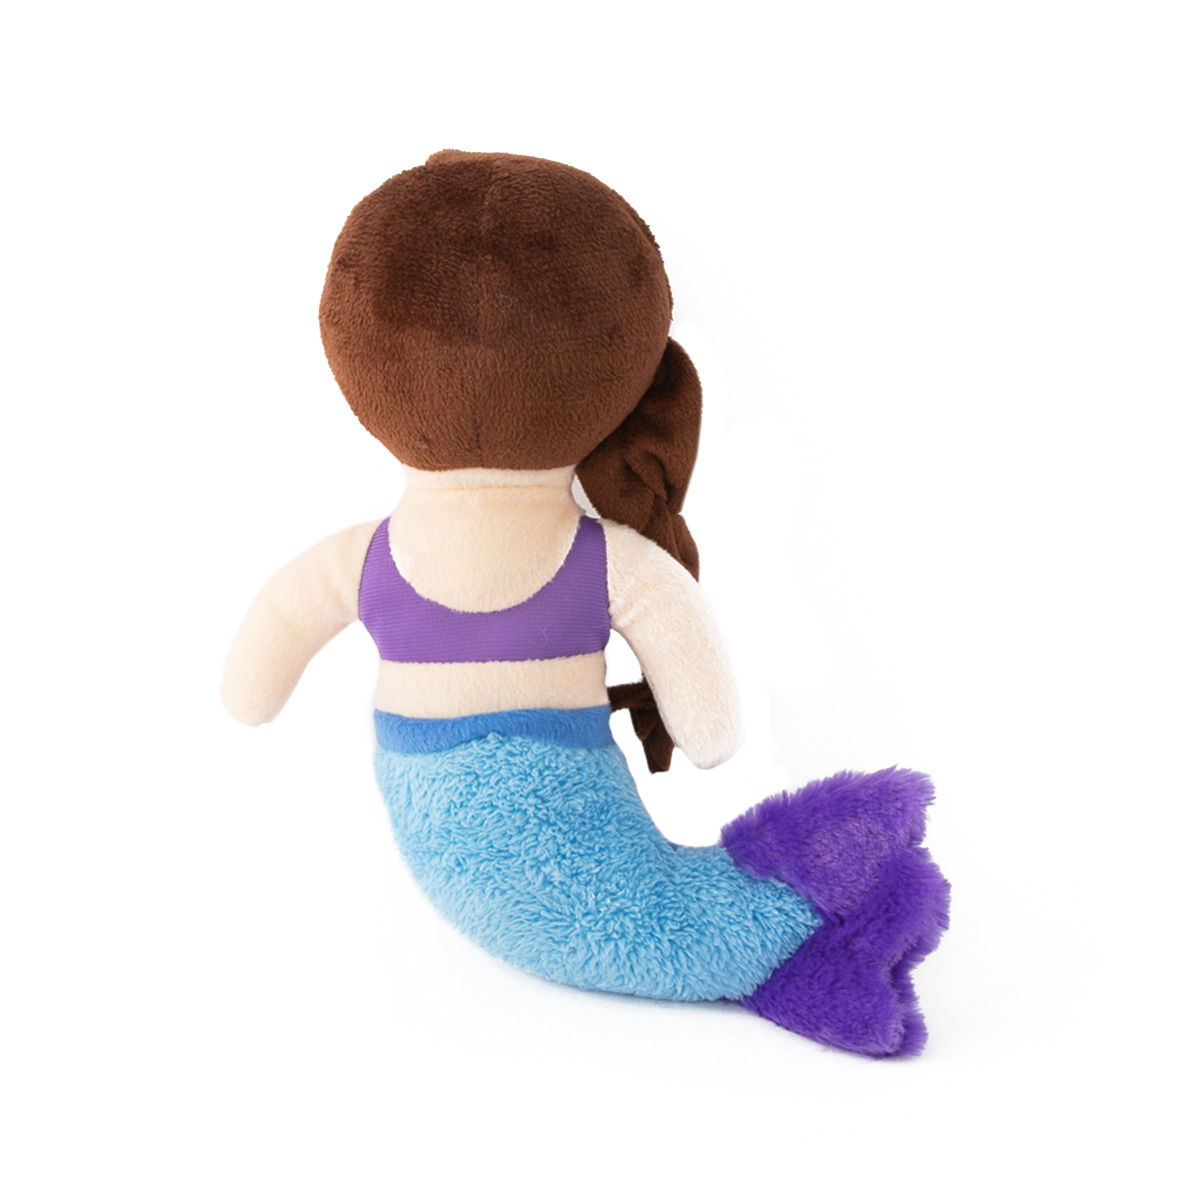 Zippy Paws Storybook Snugglerz Plush Squeaker Dog Toy - Maddy the Mermaid image 0